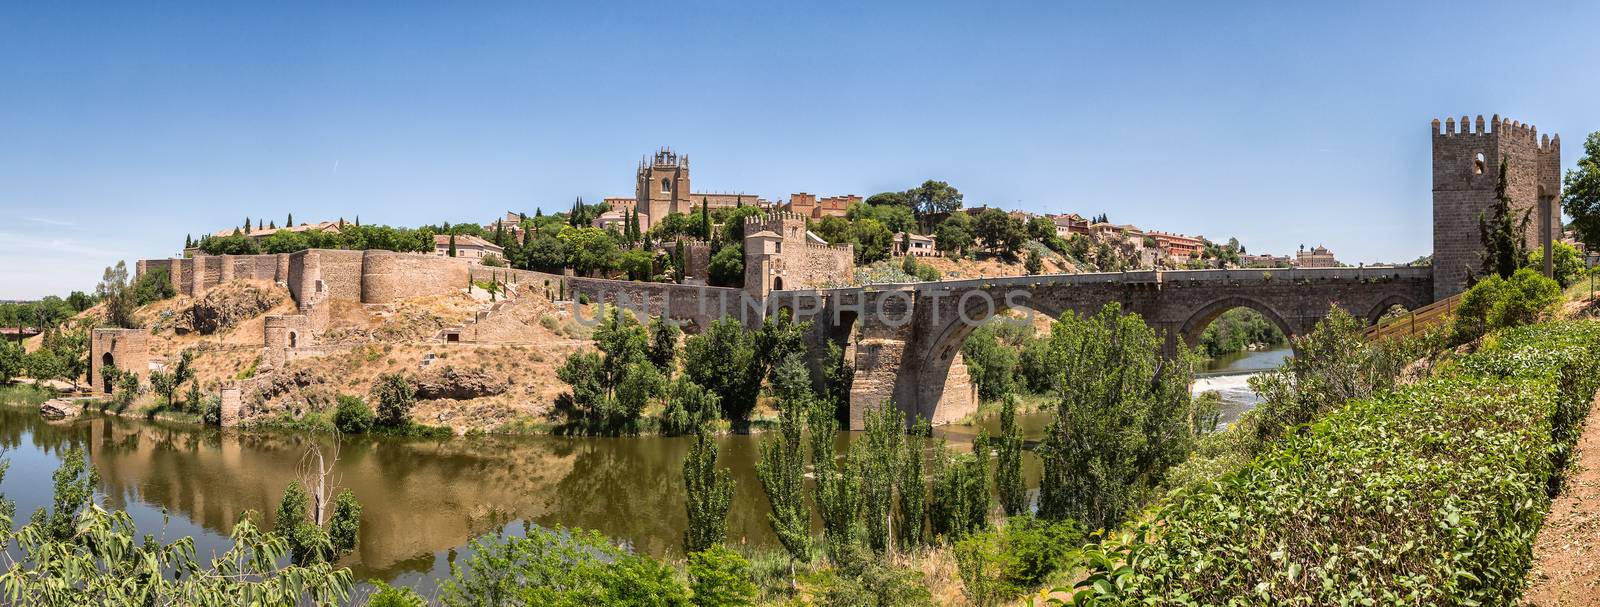 Panorama Toledo, bridge San Martin and river Tagus.